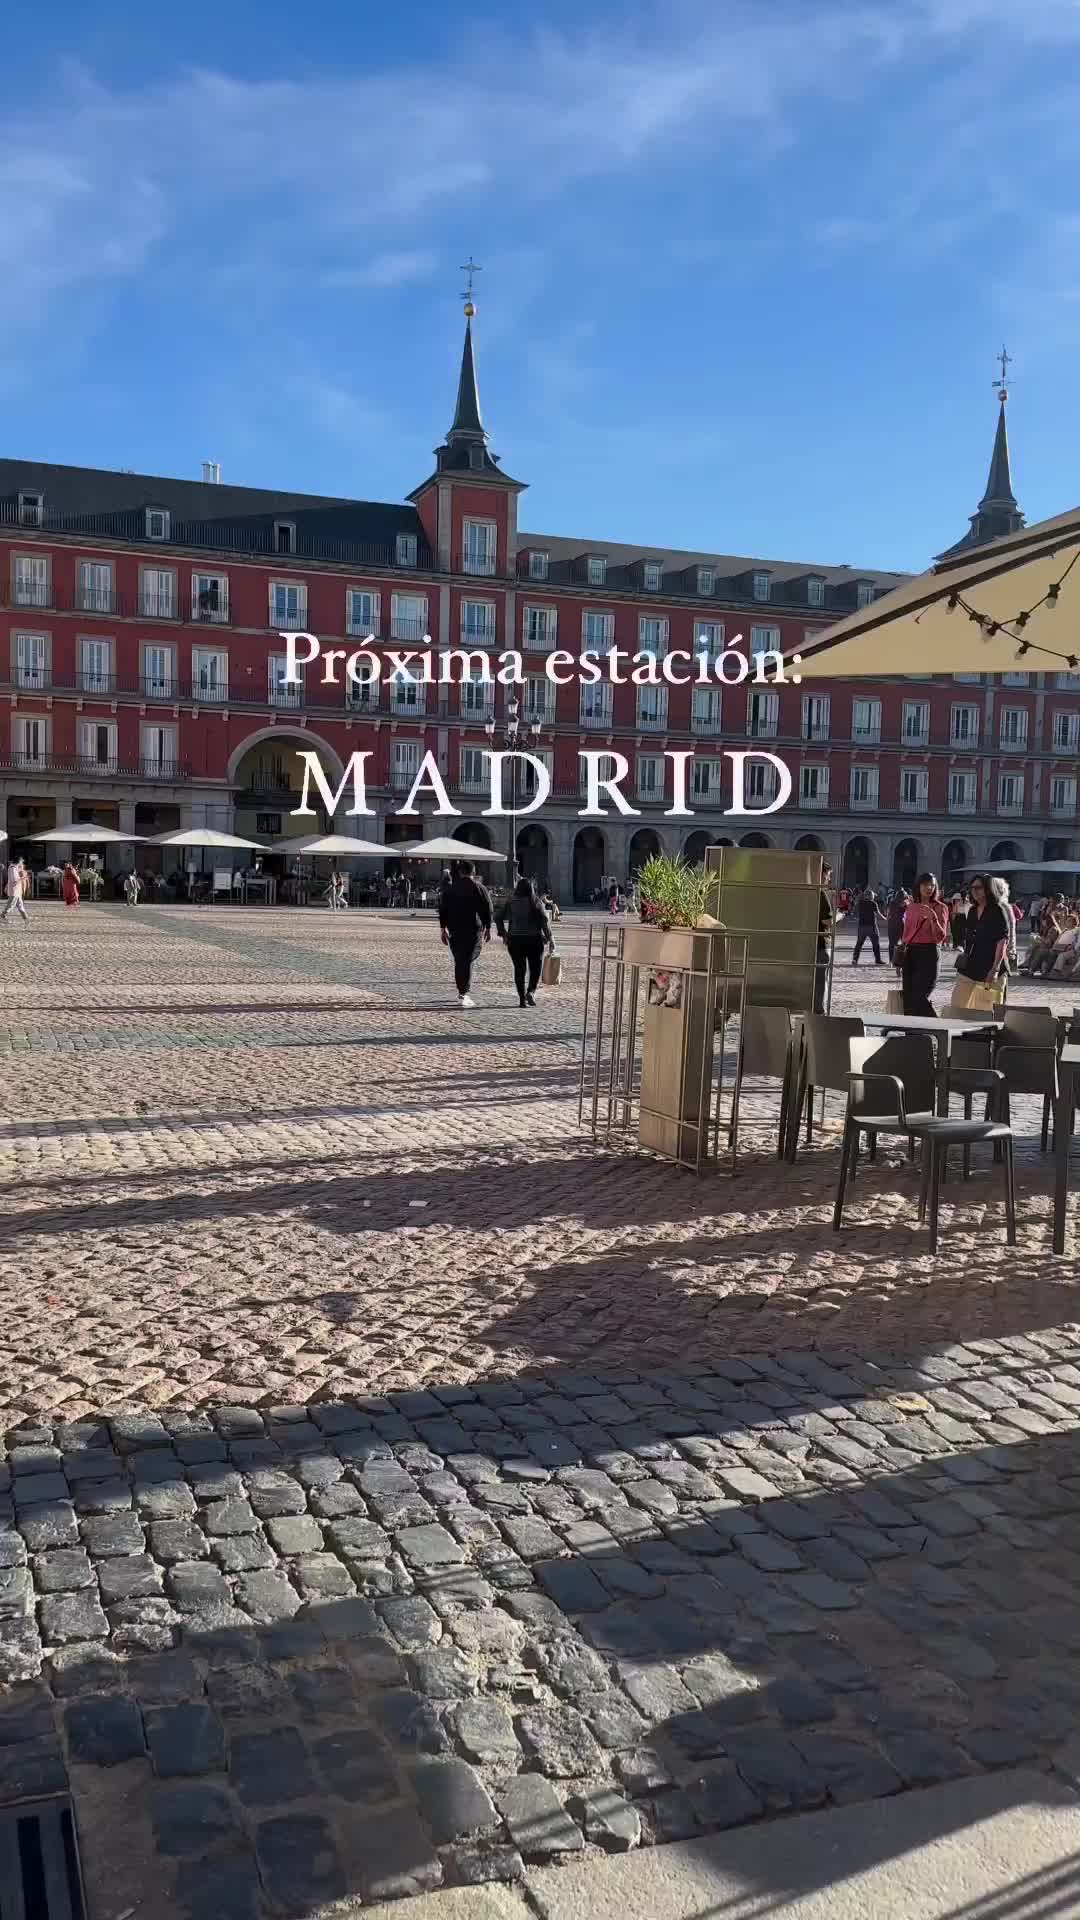 Visit Madrid: Your Dream Travel Destination Awaits!